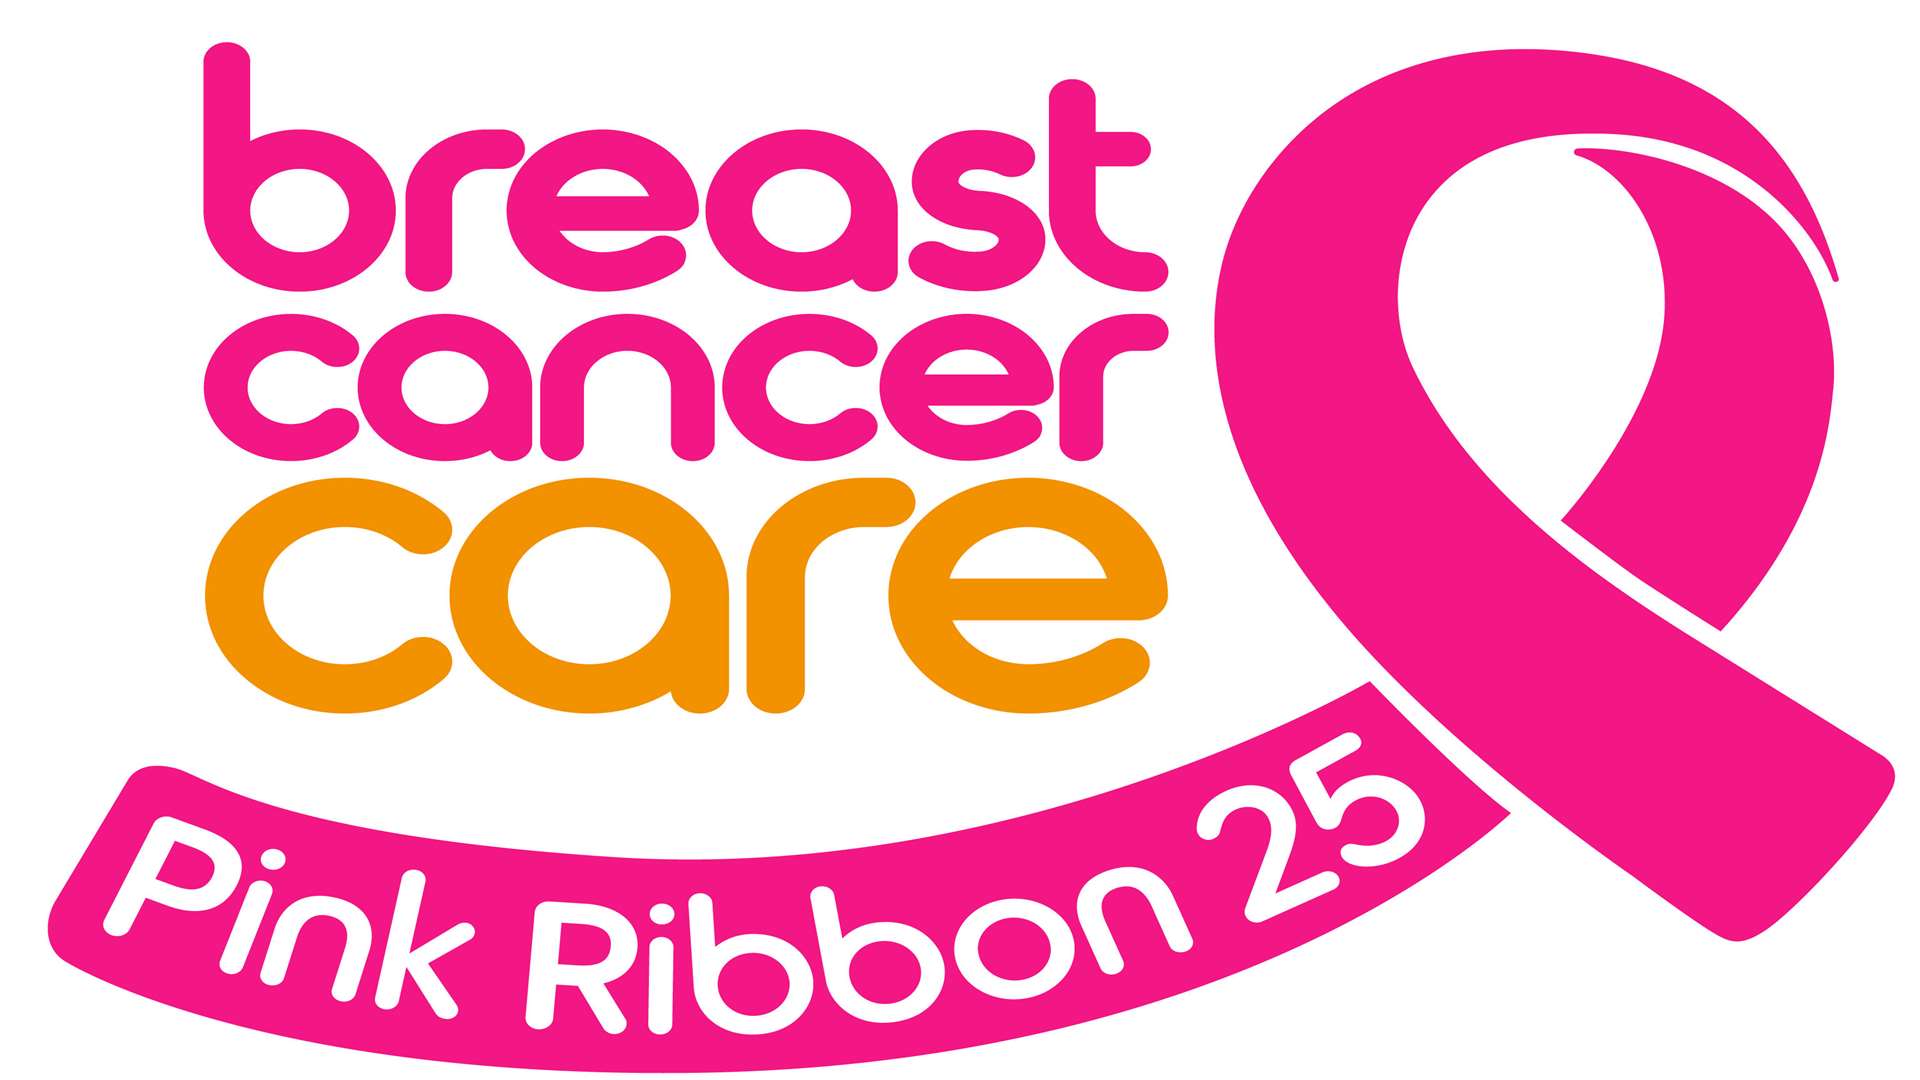 More details at www.breastcancercare.org.uk